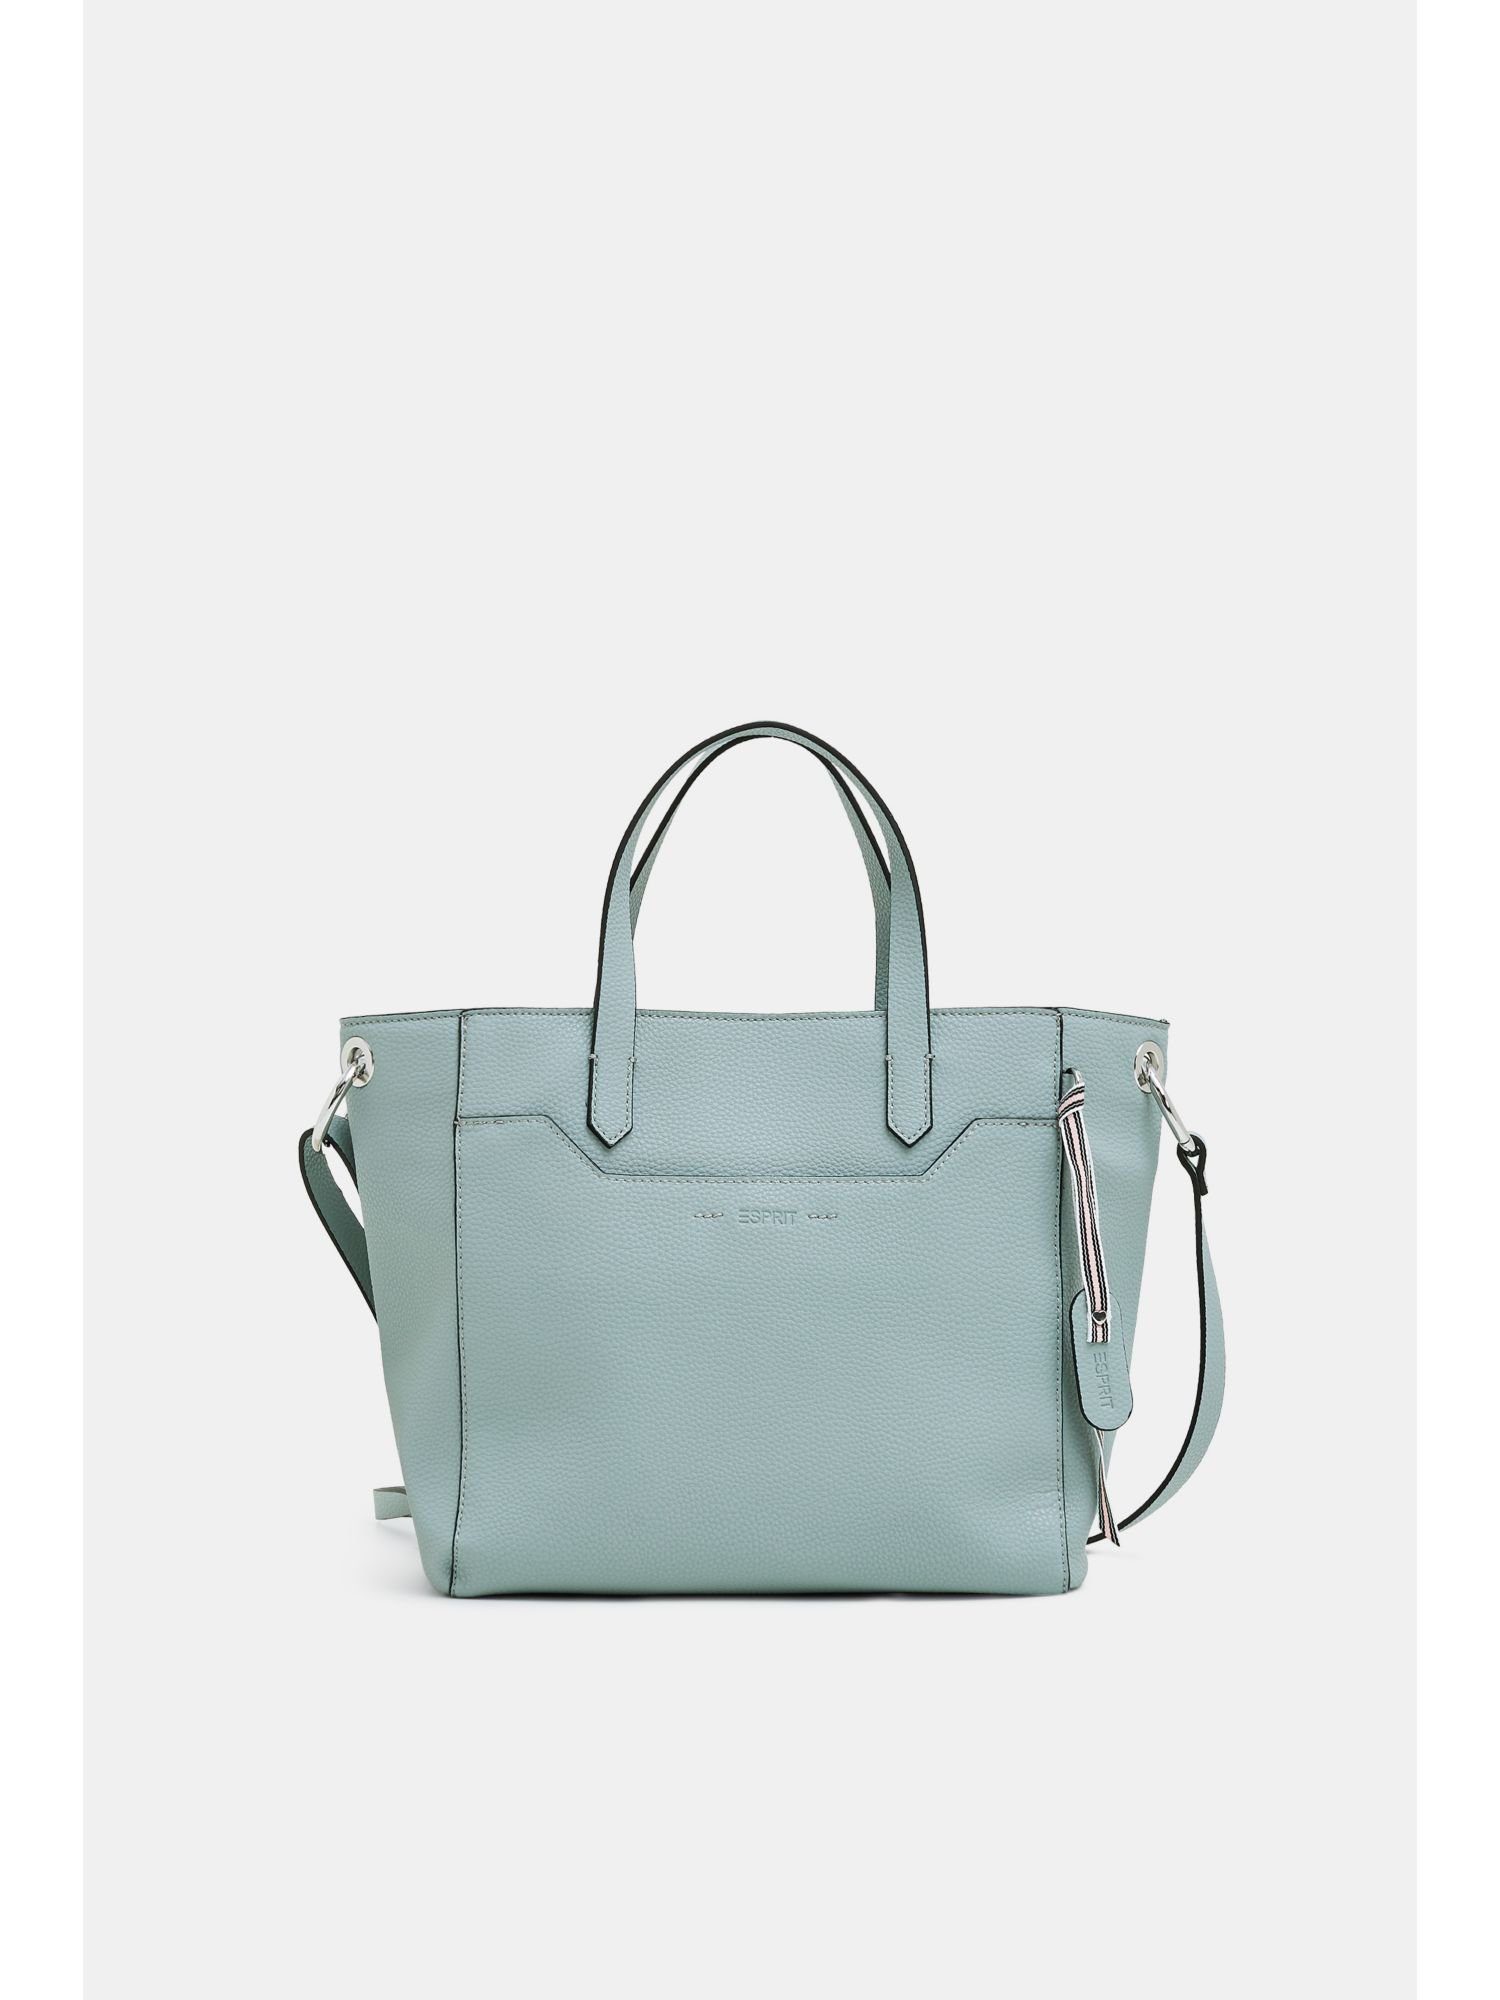 Esprit Handtasche »City Bag in Leder-Optik« kaufen | OTTO